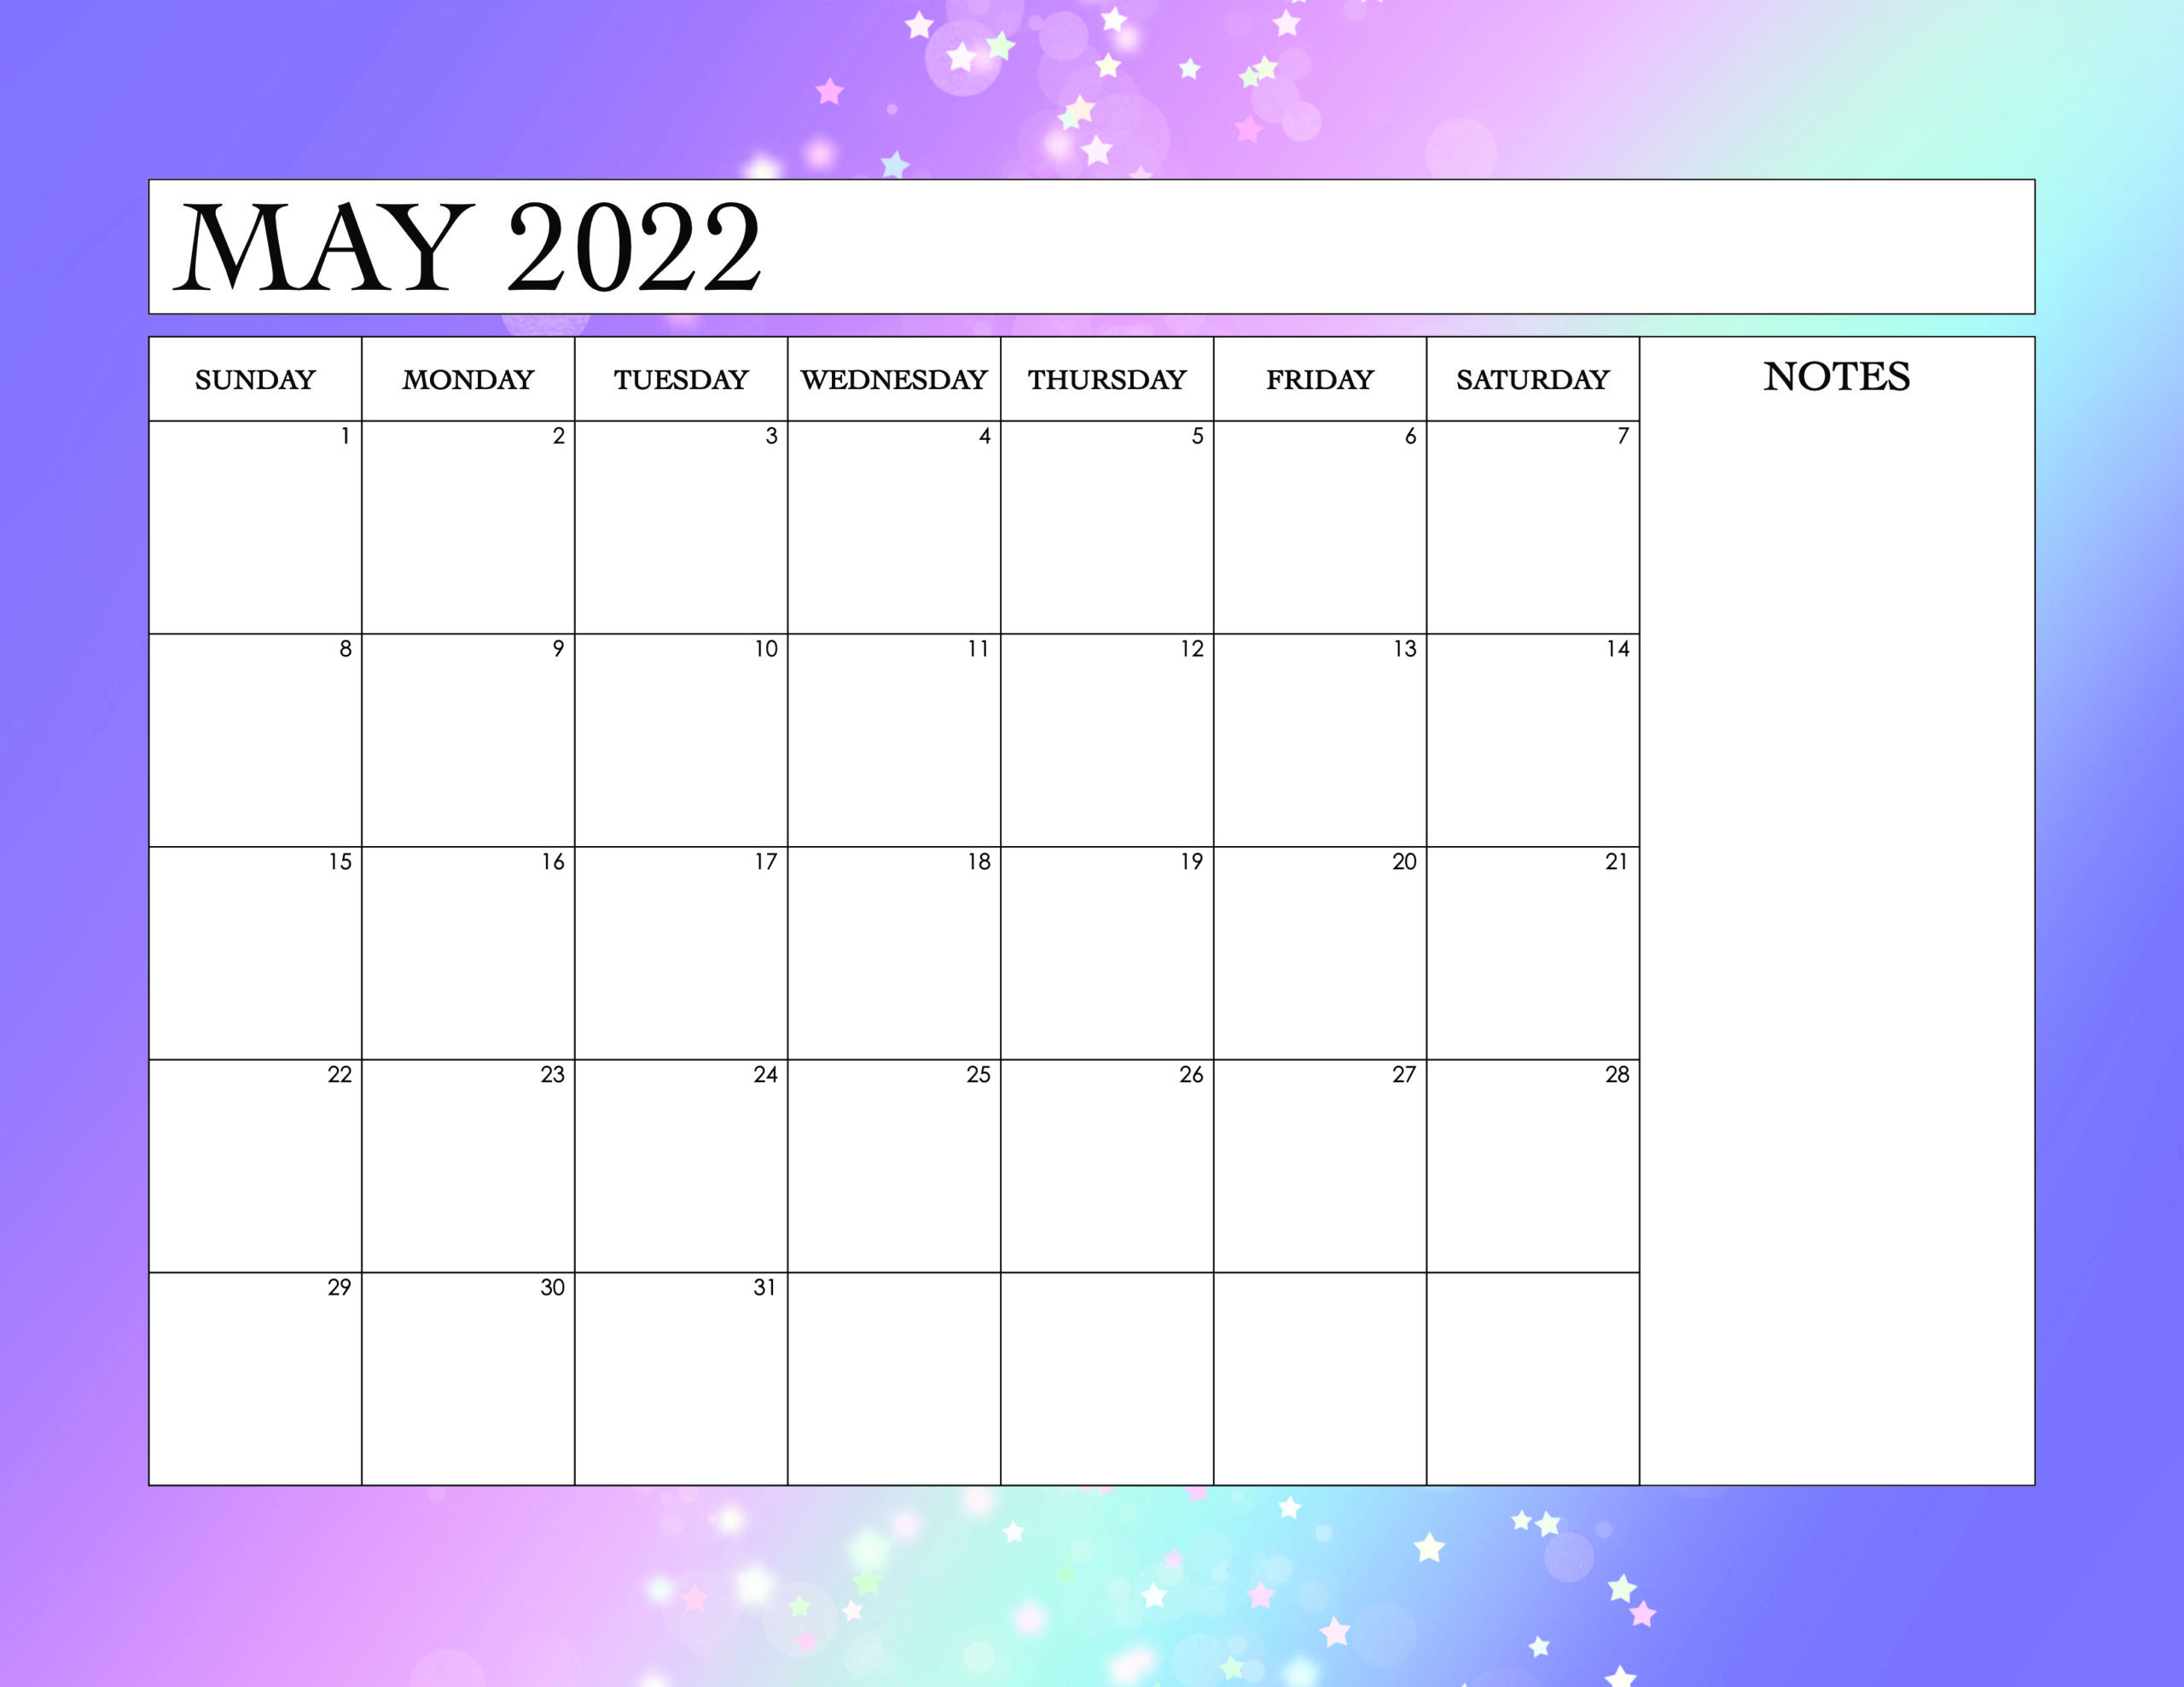 2022 Printable Calendar